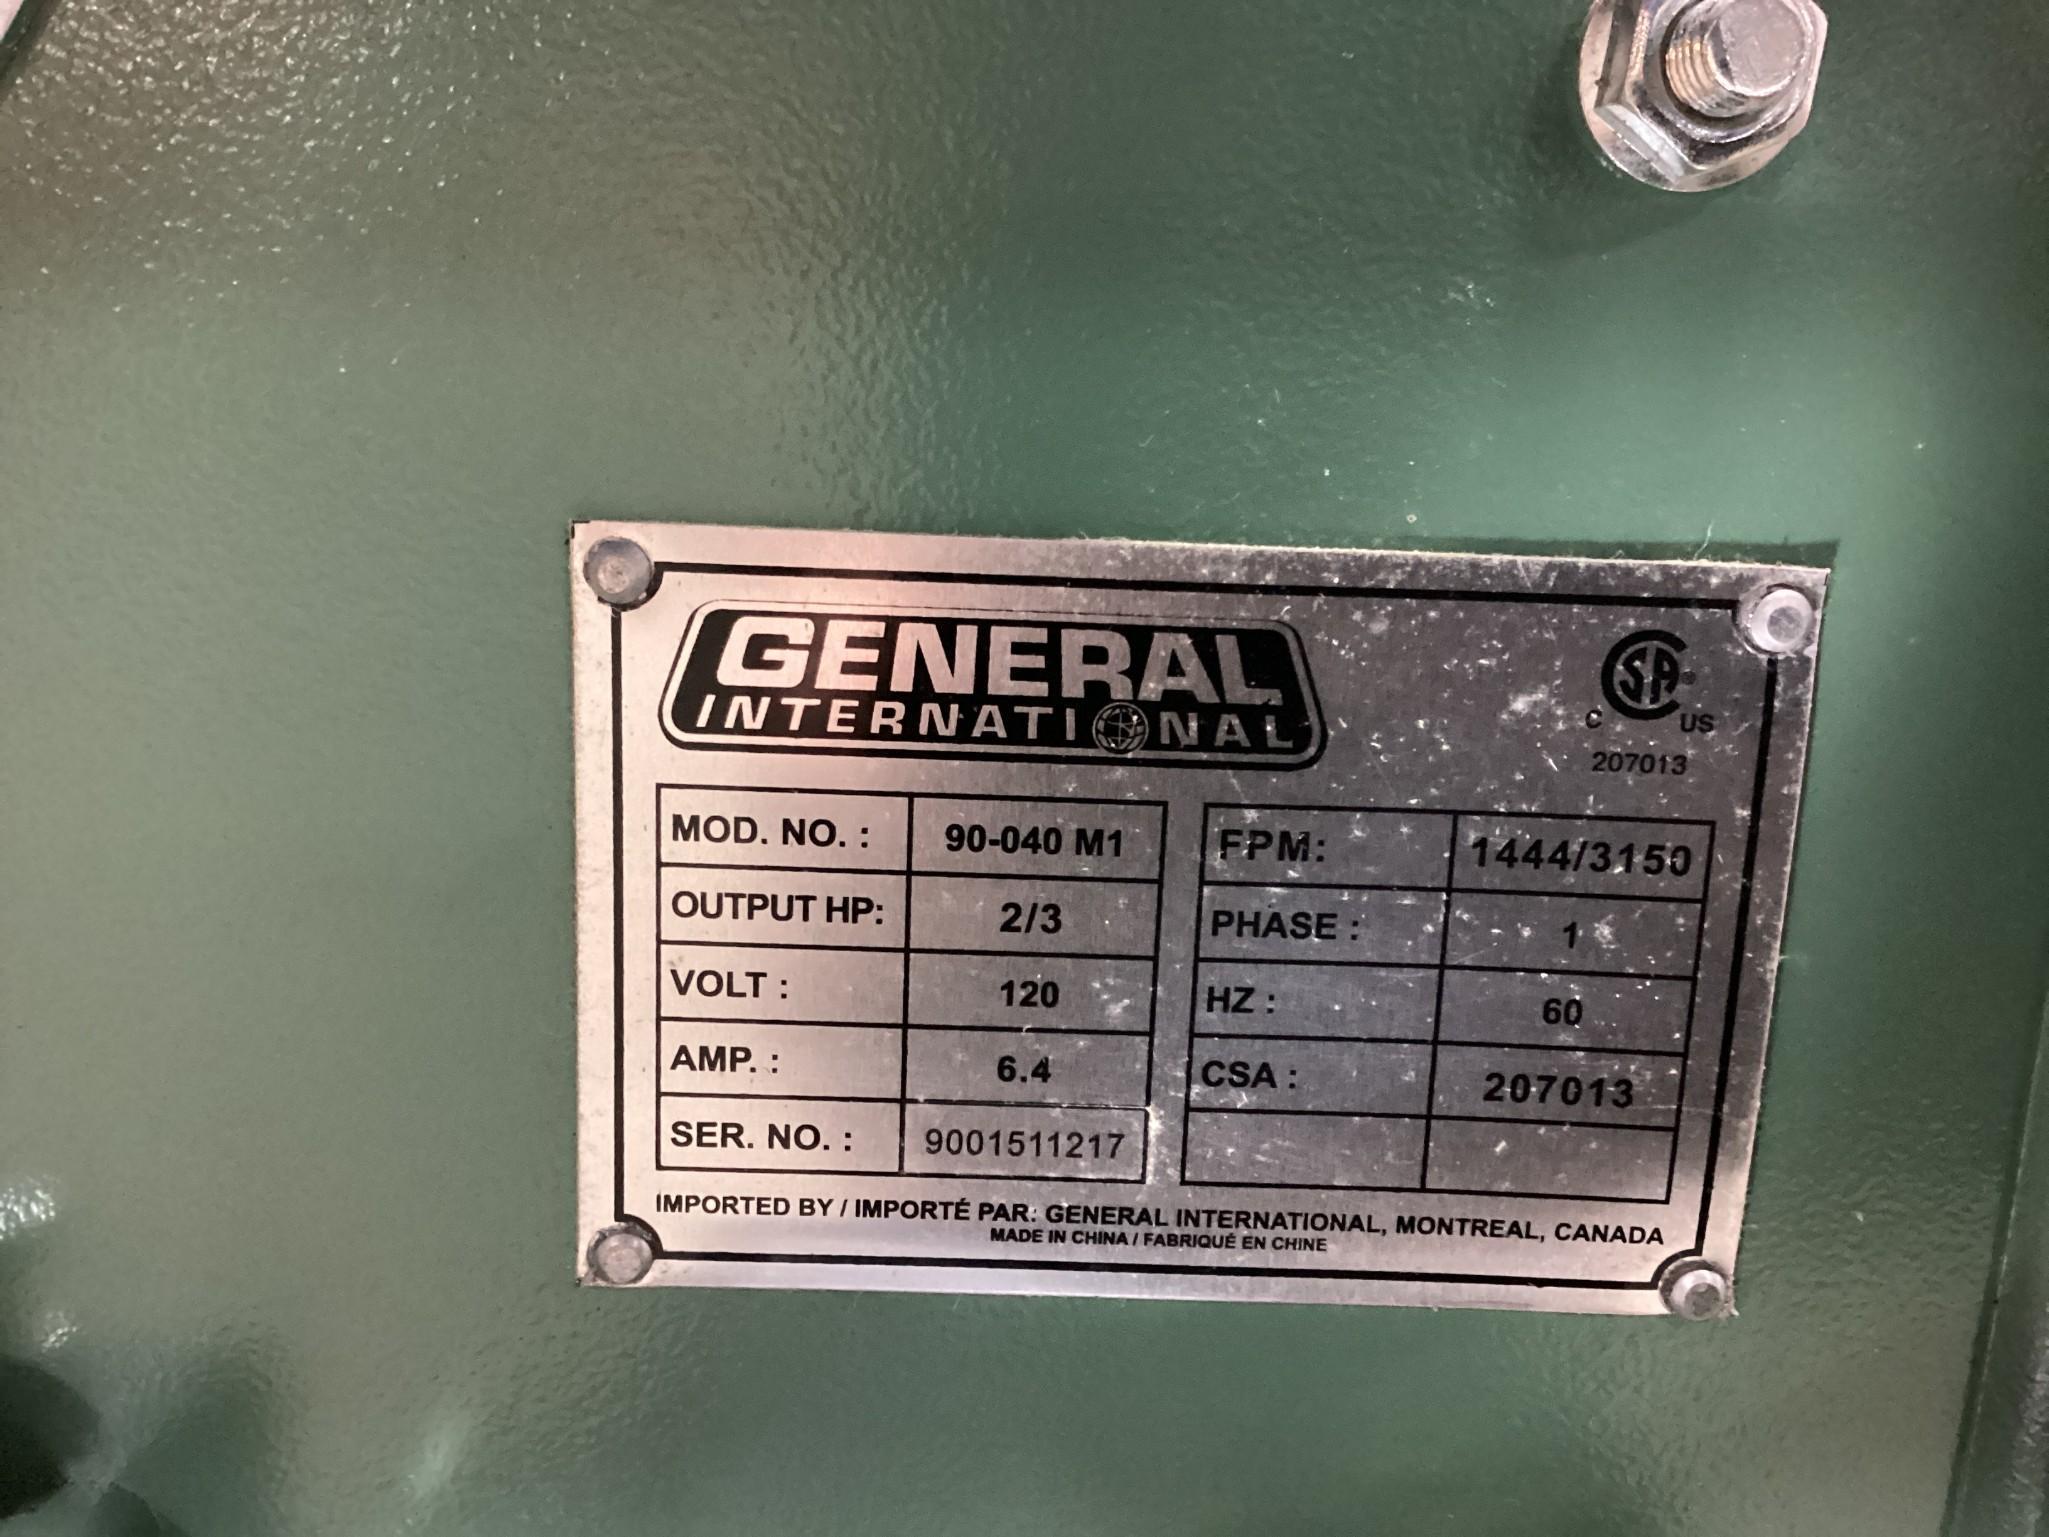 New Unused General Model 90-040 M1 12"Bandsaw